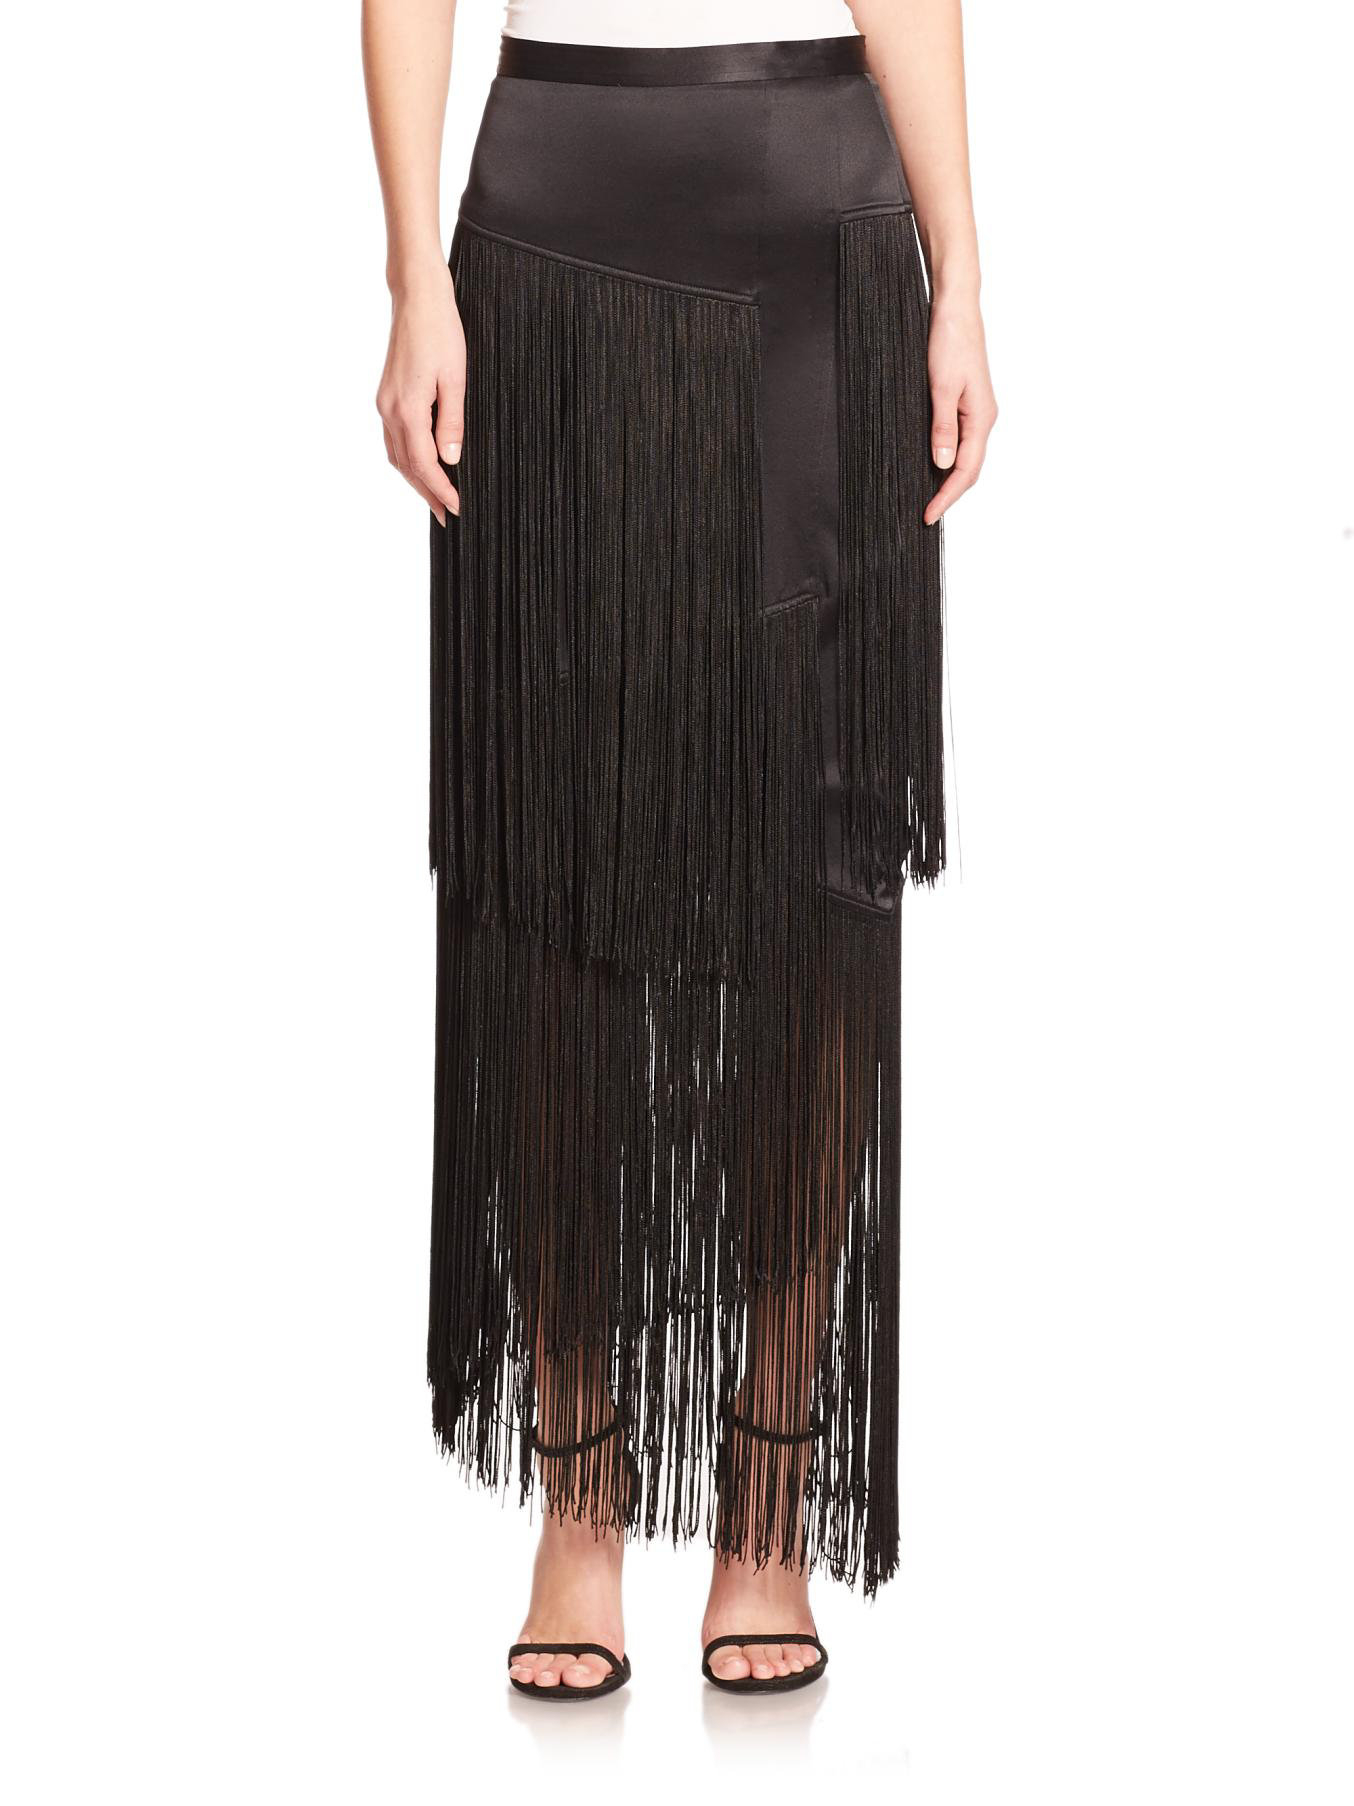 Tamara mellon Silk Layered Fringe Maxi Skirt in Black | Lyst